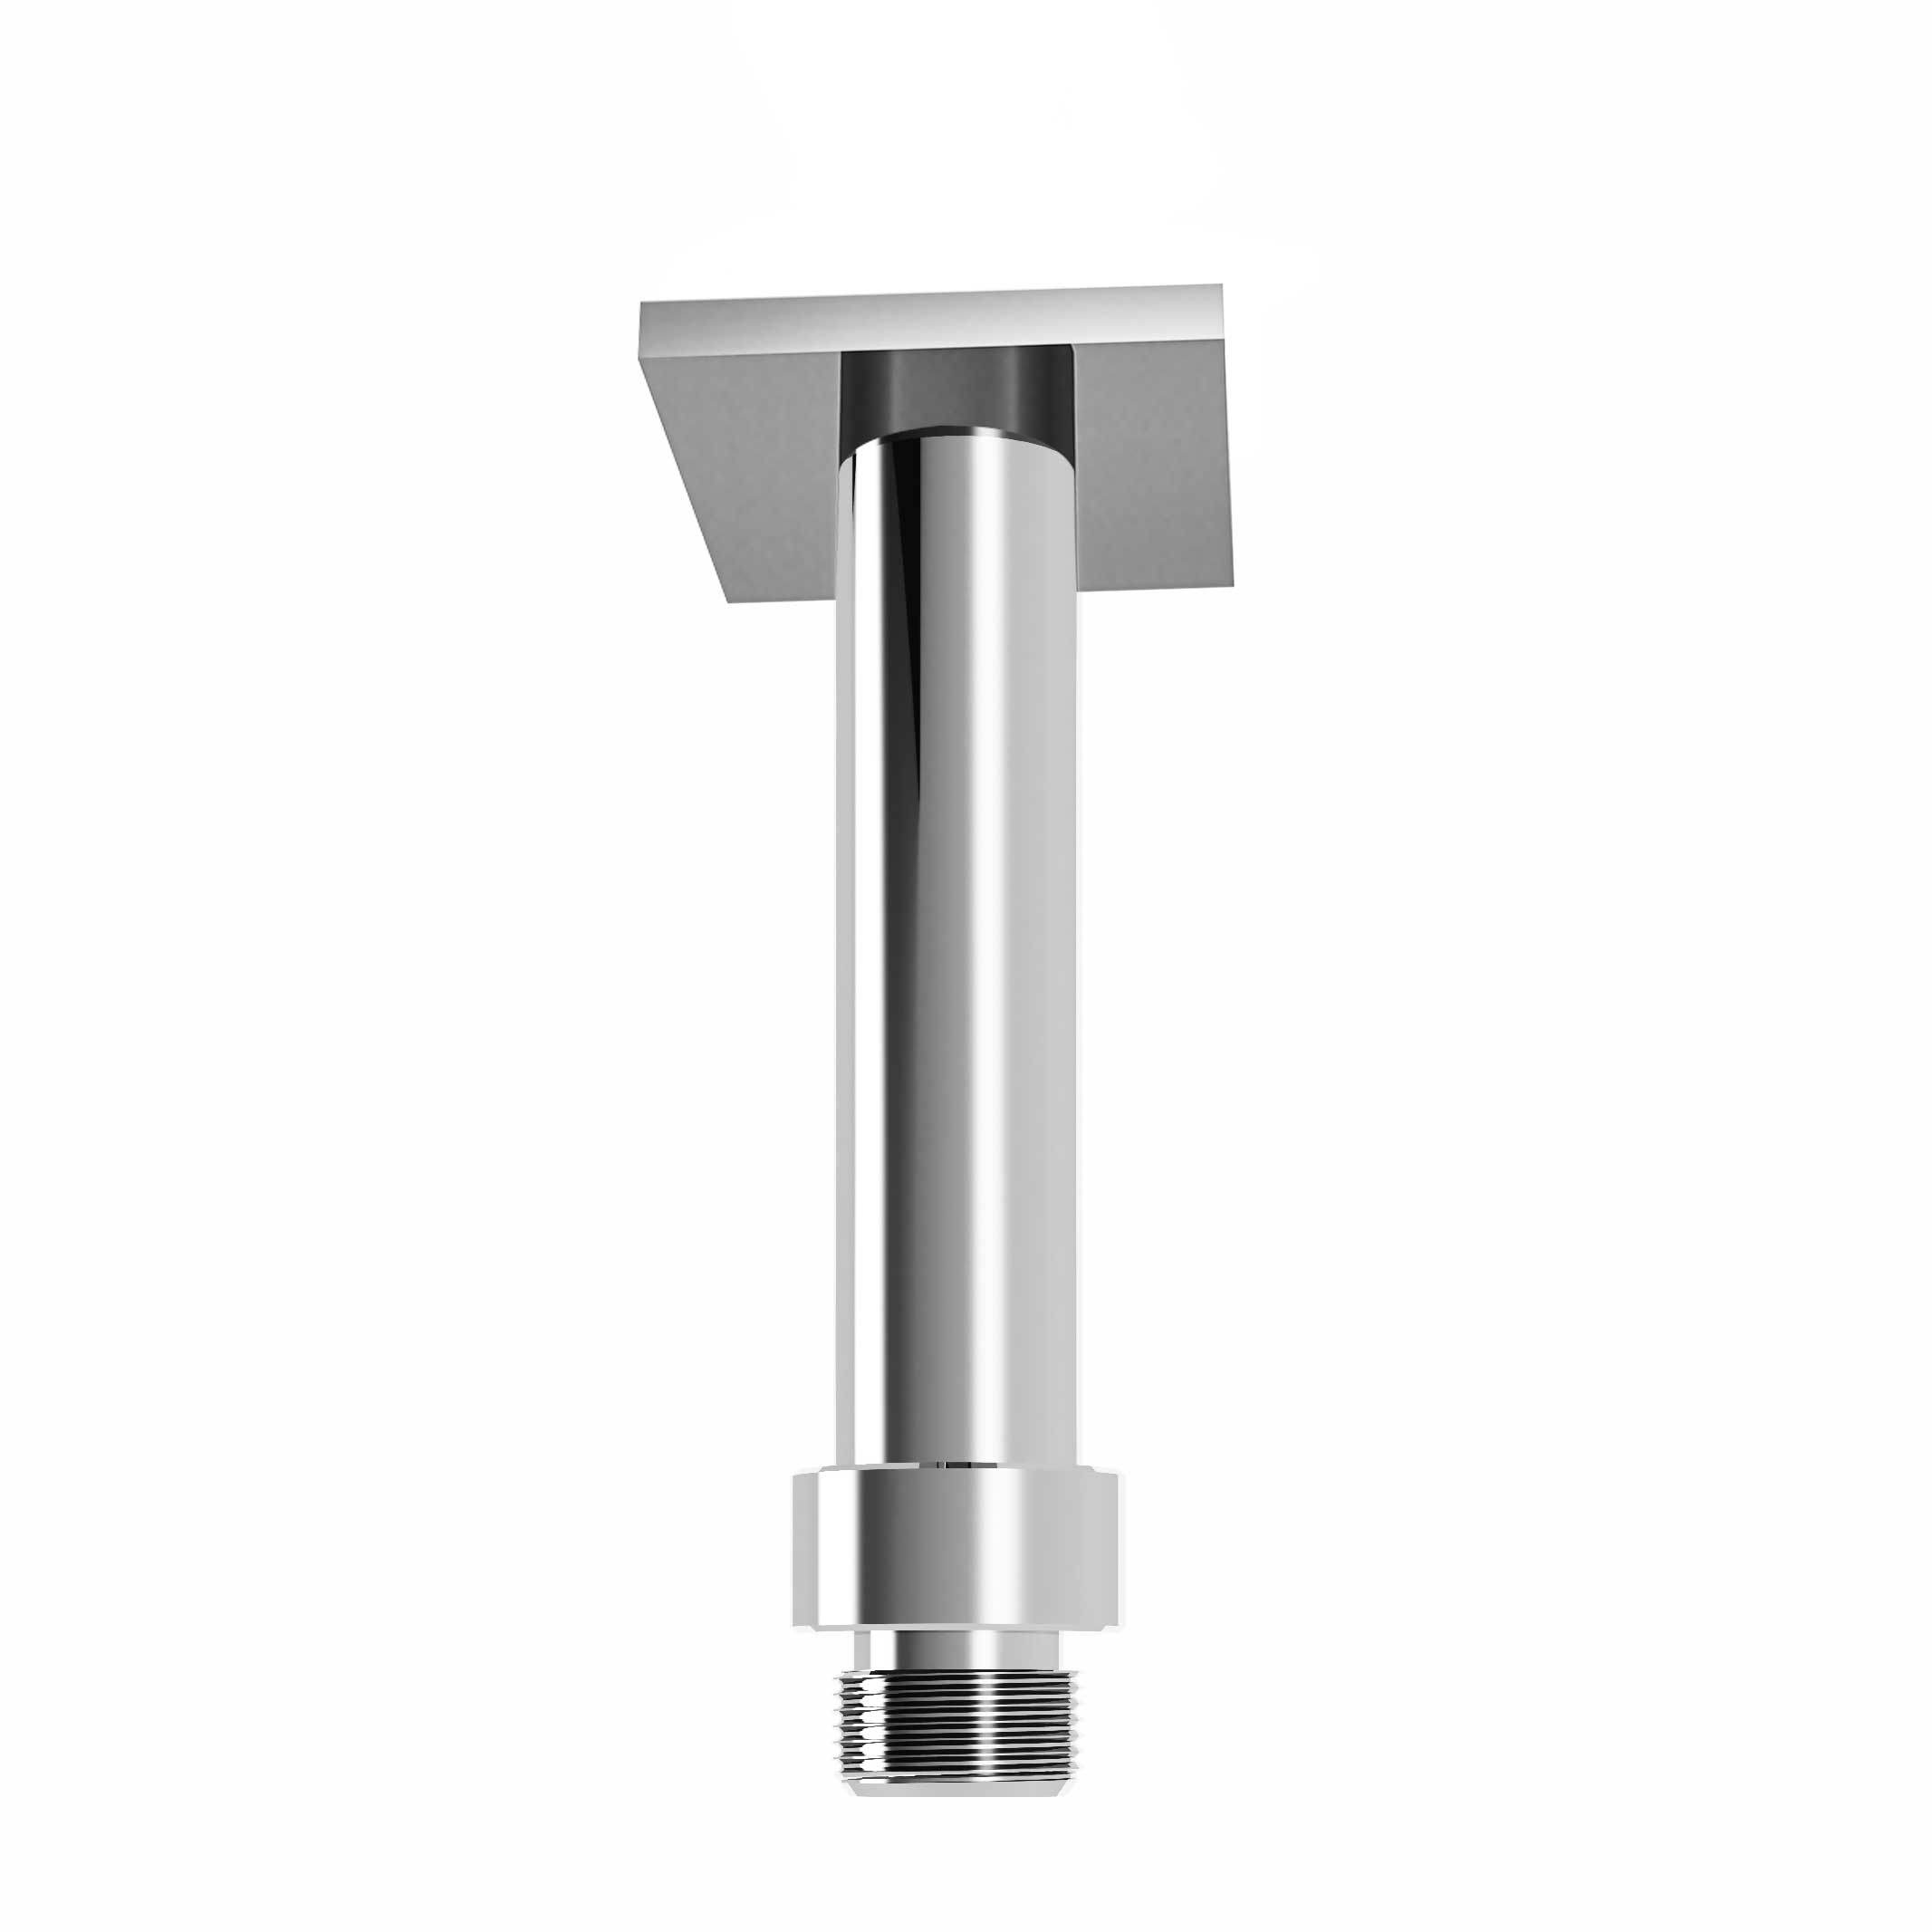 S05-2C120 Vertical shower arm 120mm